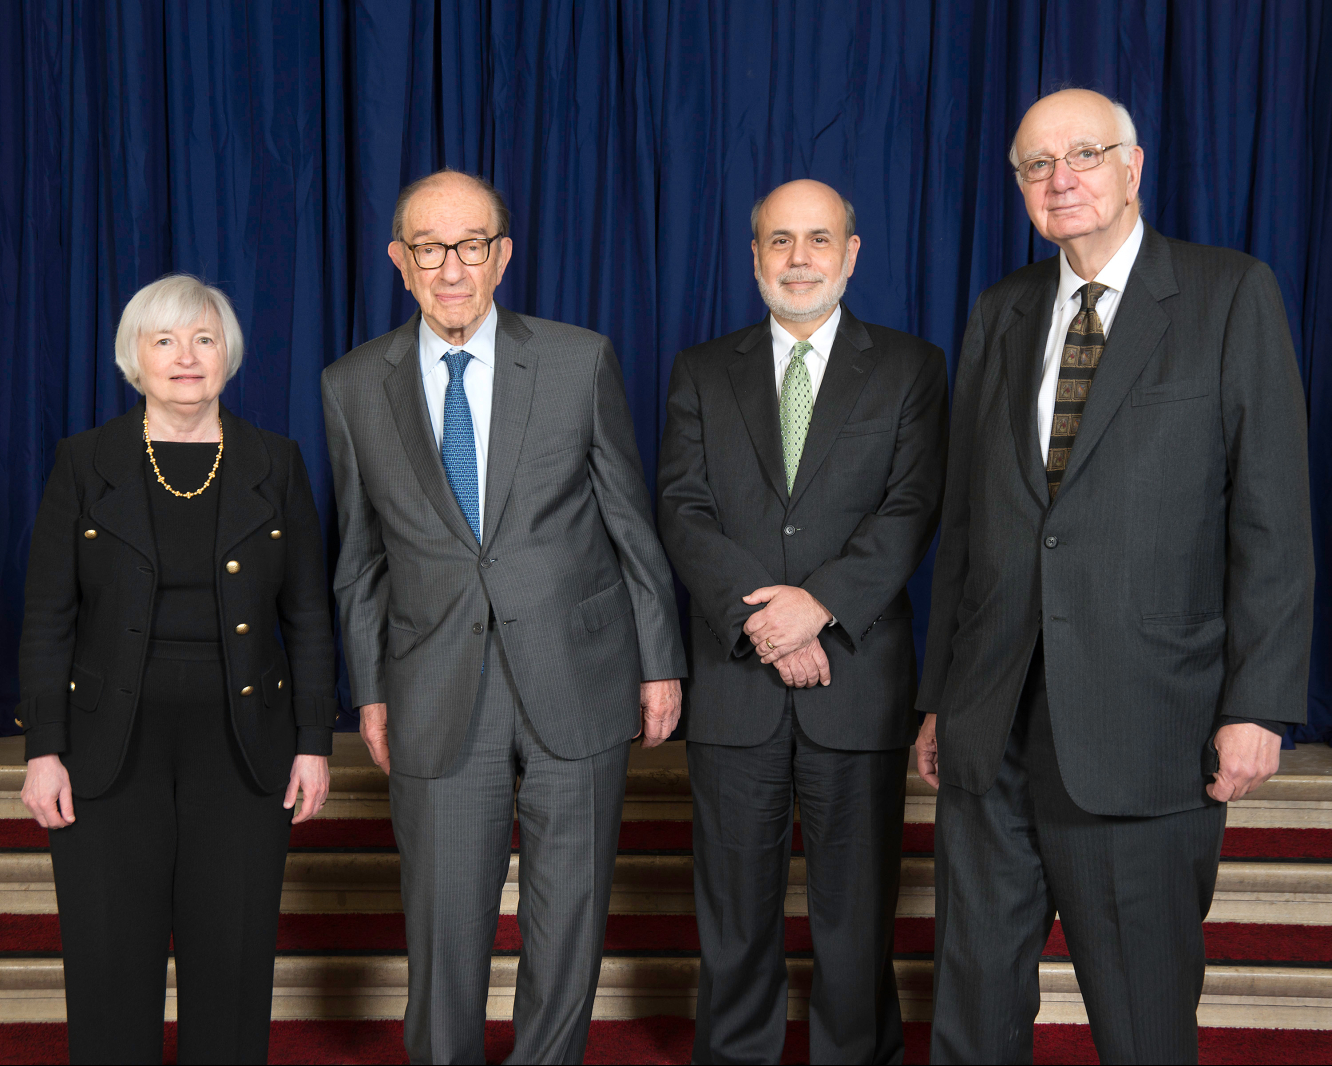 (Von links nach rechts: Janet Yellen, Alan Greenspan, Ben Shalom Bernanke, Paul Volcker)